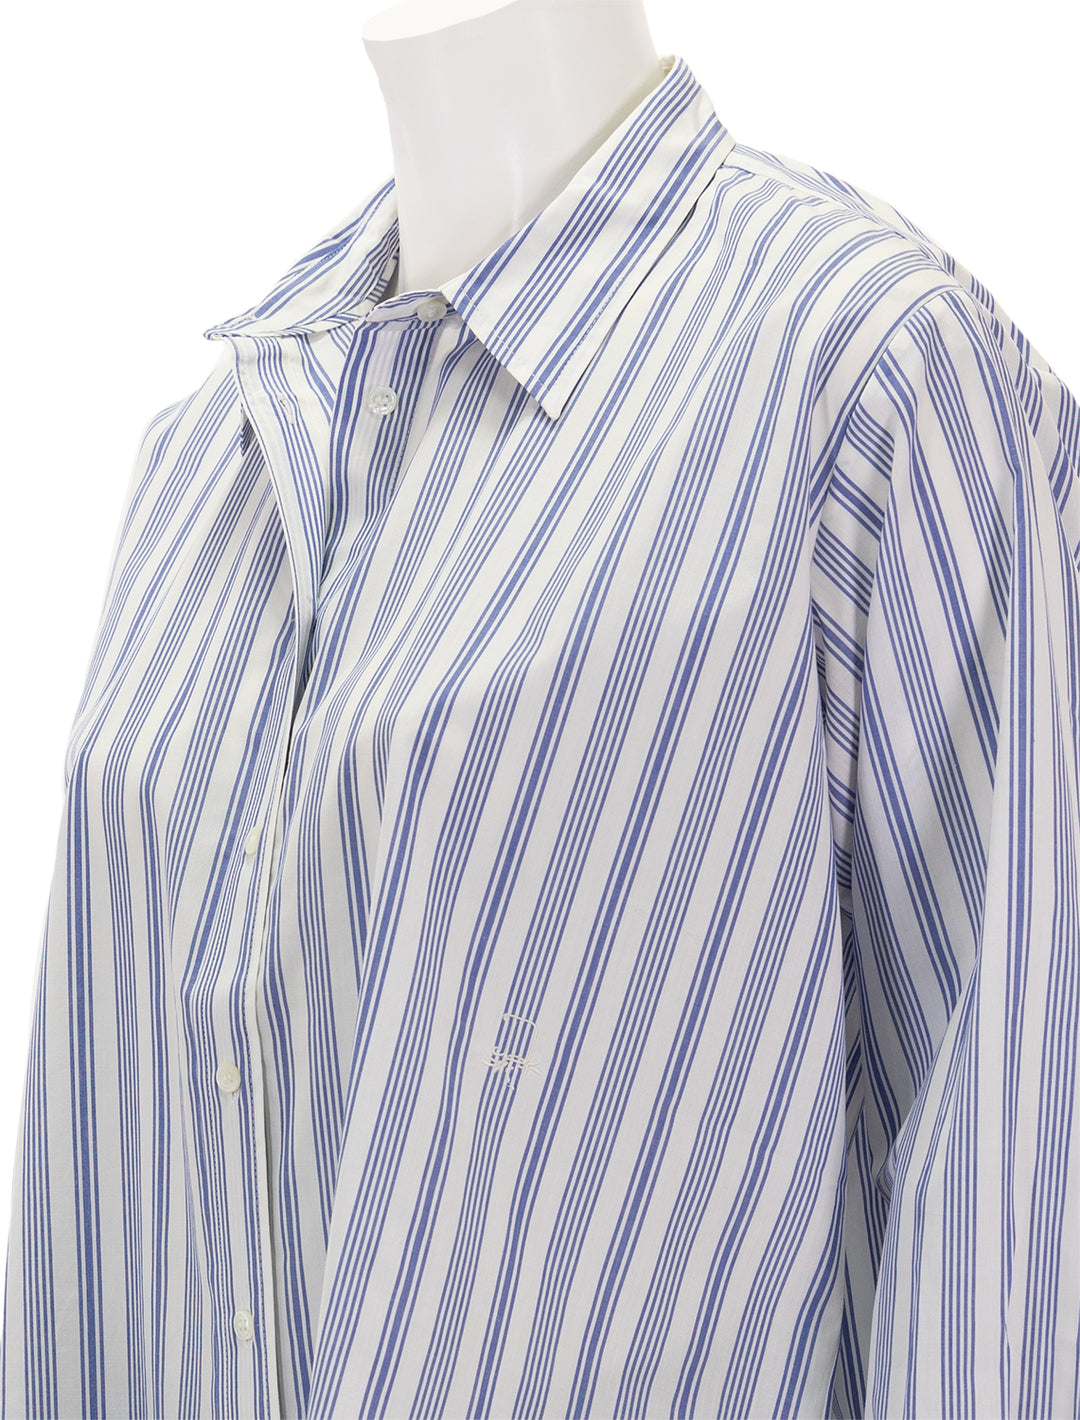 Close-up view of  DOEN's hava top in indigo sorrento stripe.